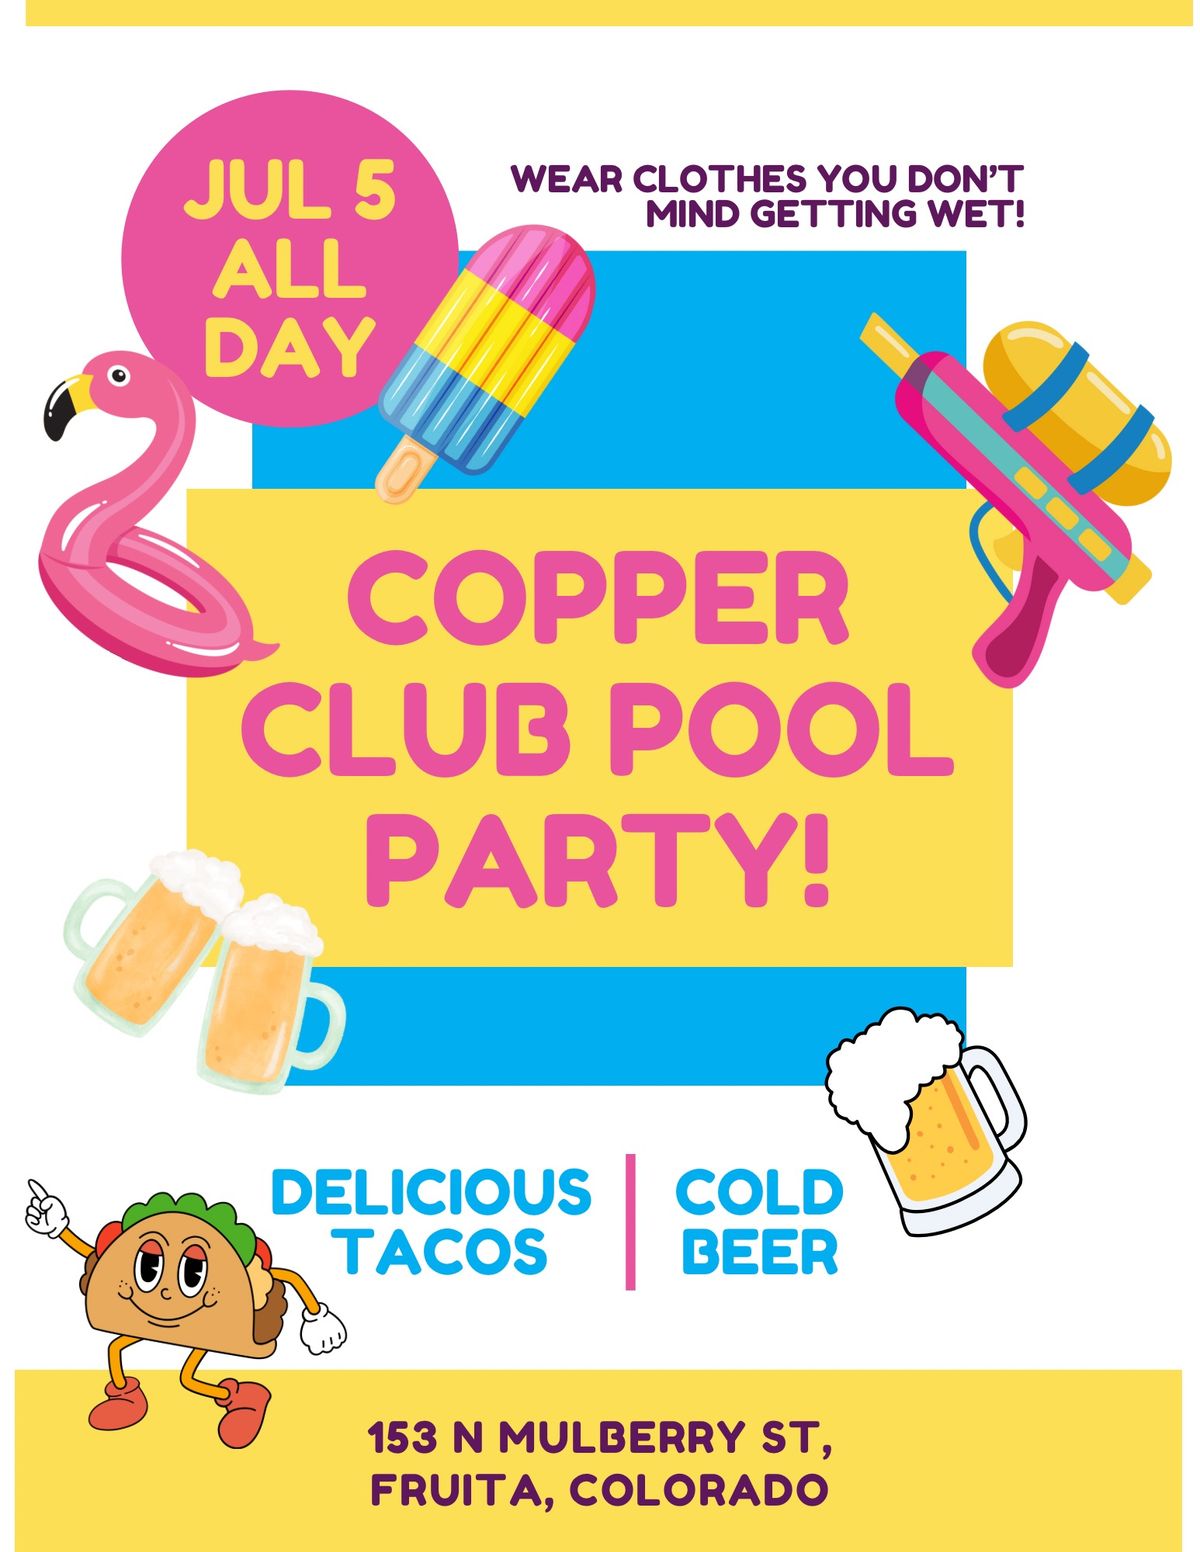 Copper Club Pool Party!